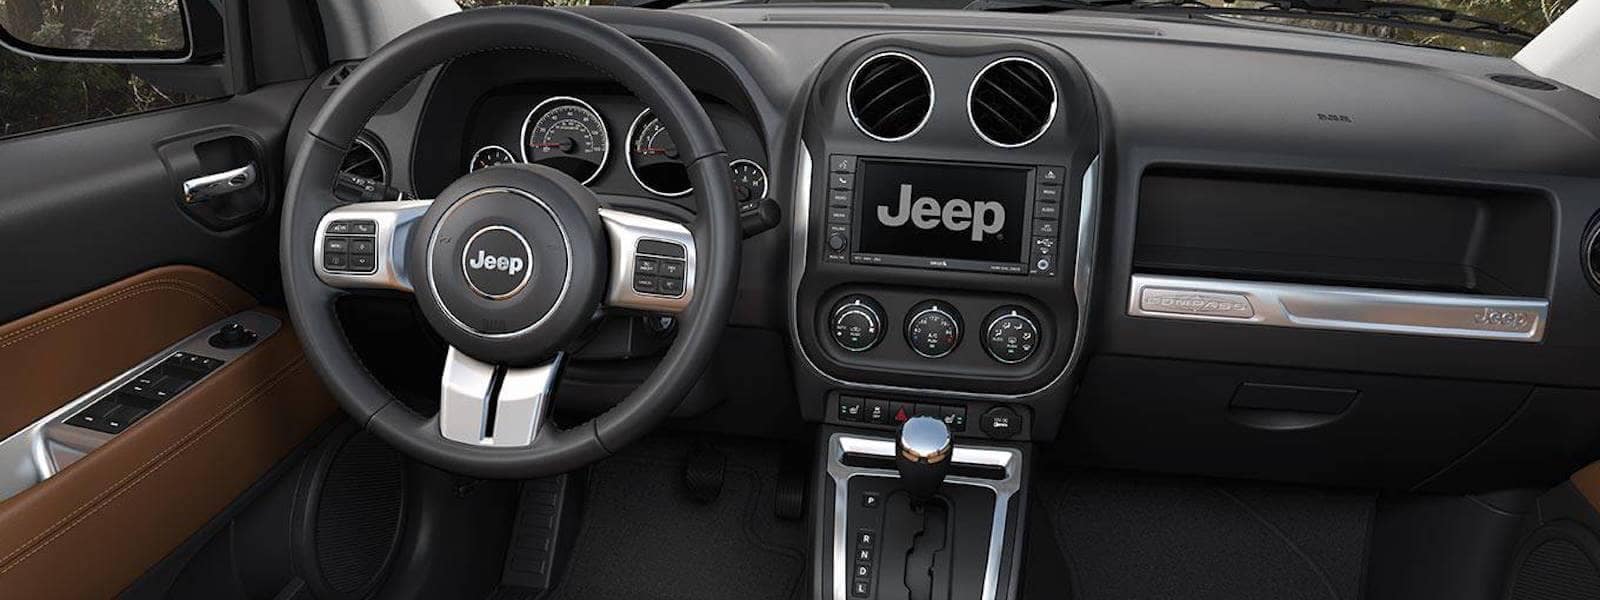 2016 Jeep Compass Interior